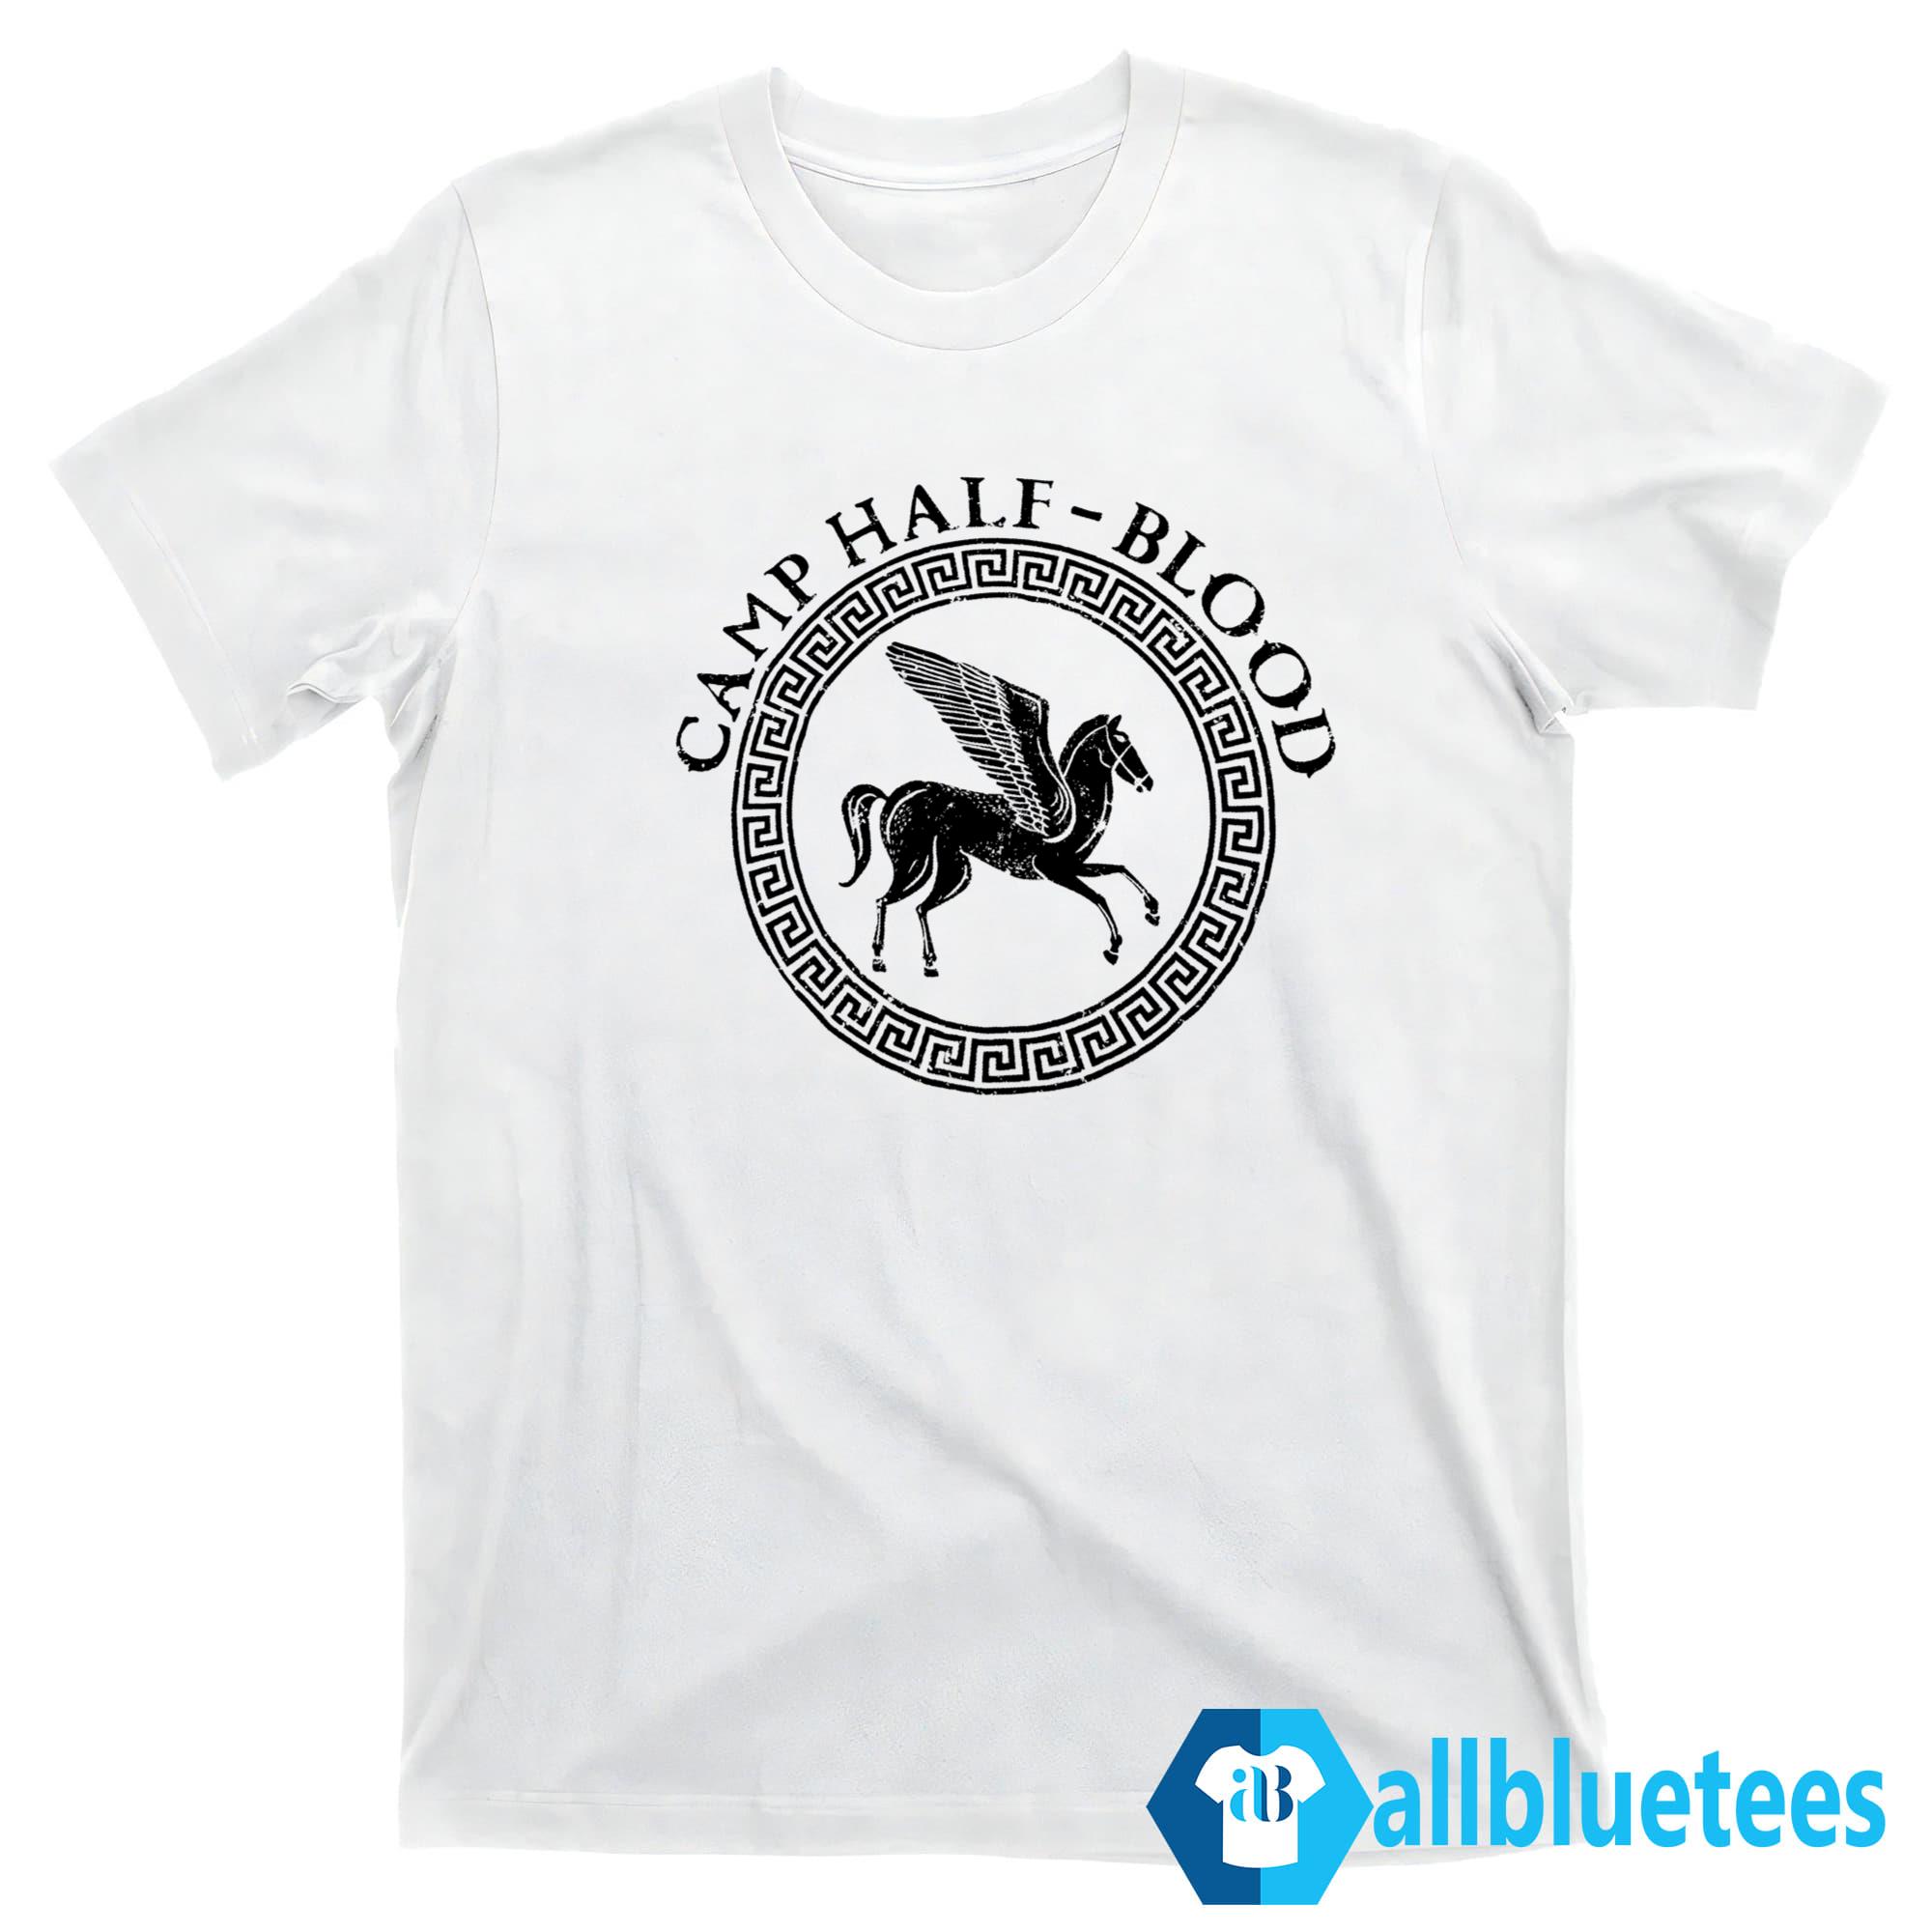 Adult Camp Half-blood: Percy Jackson T-shirt 